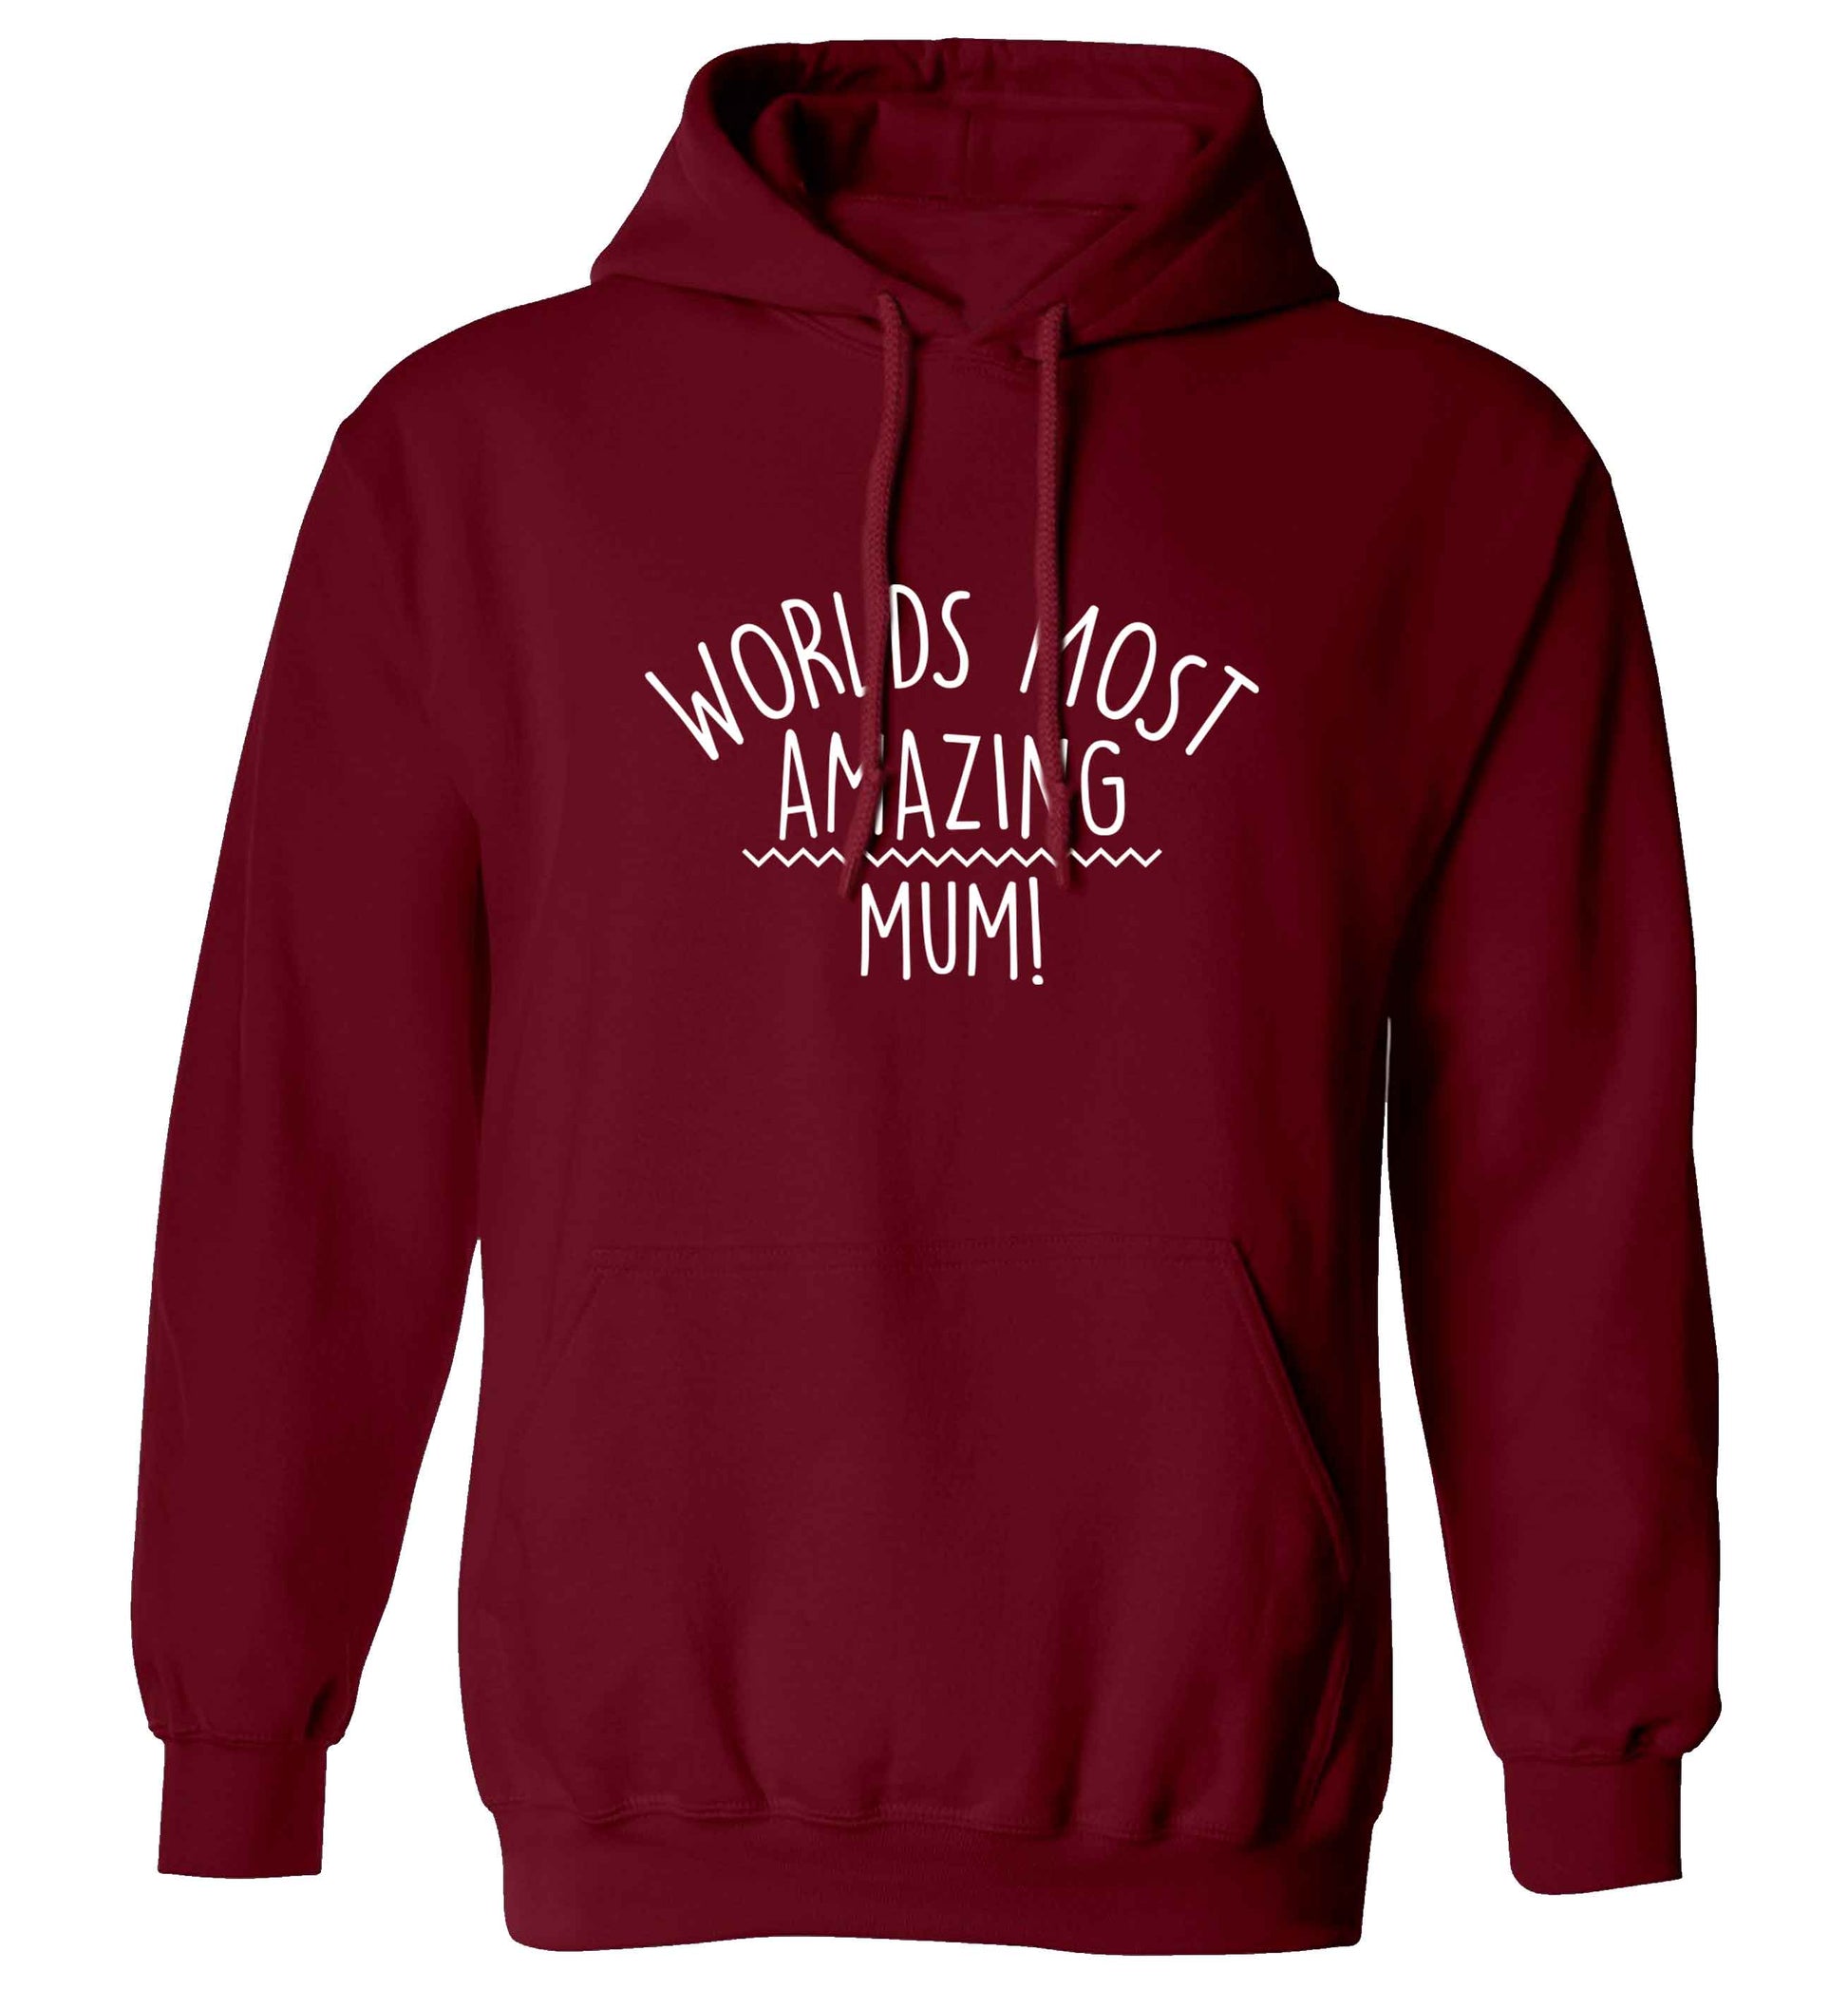 Worlds most amazing mum adults unisex maroon hoodie 2XL